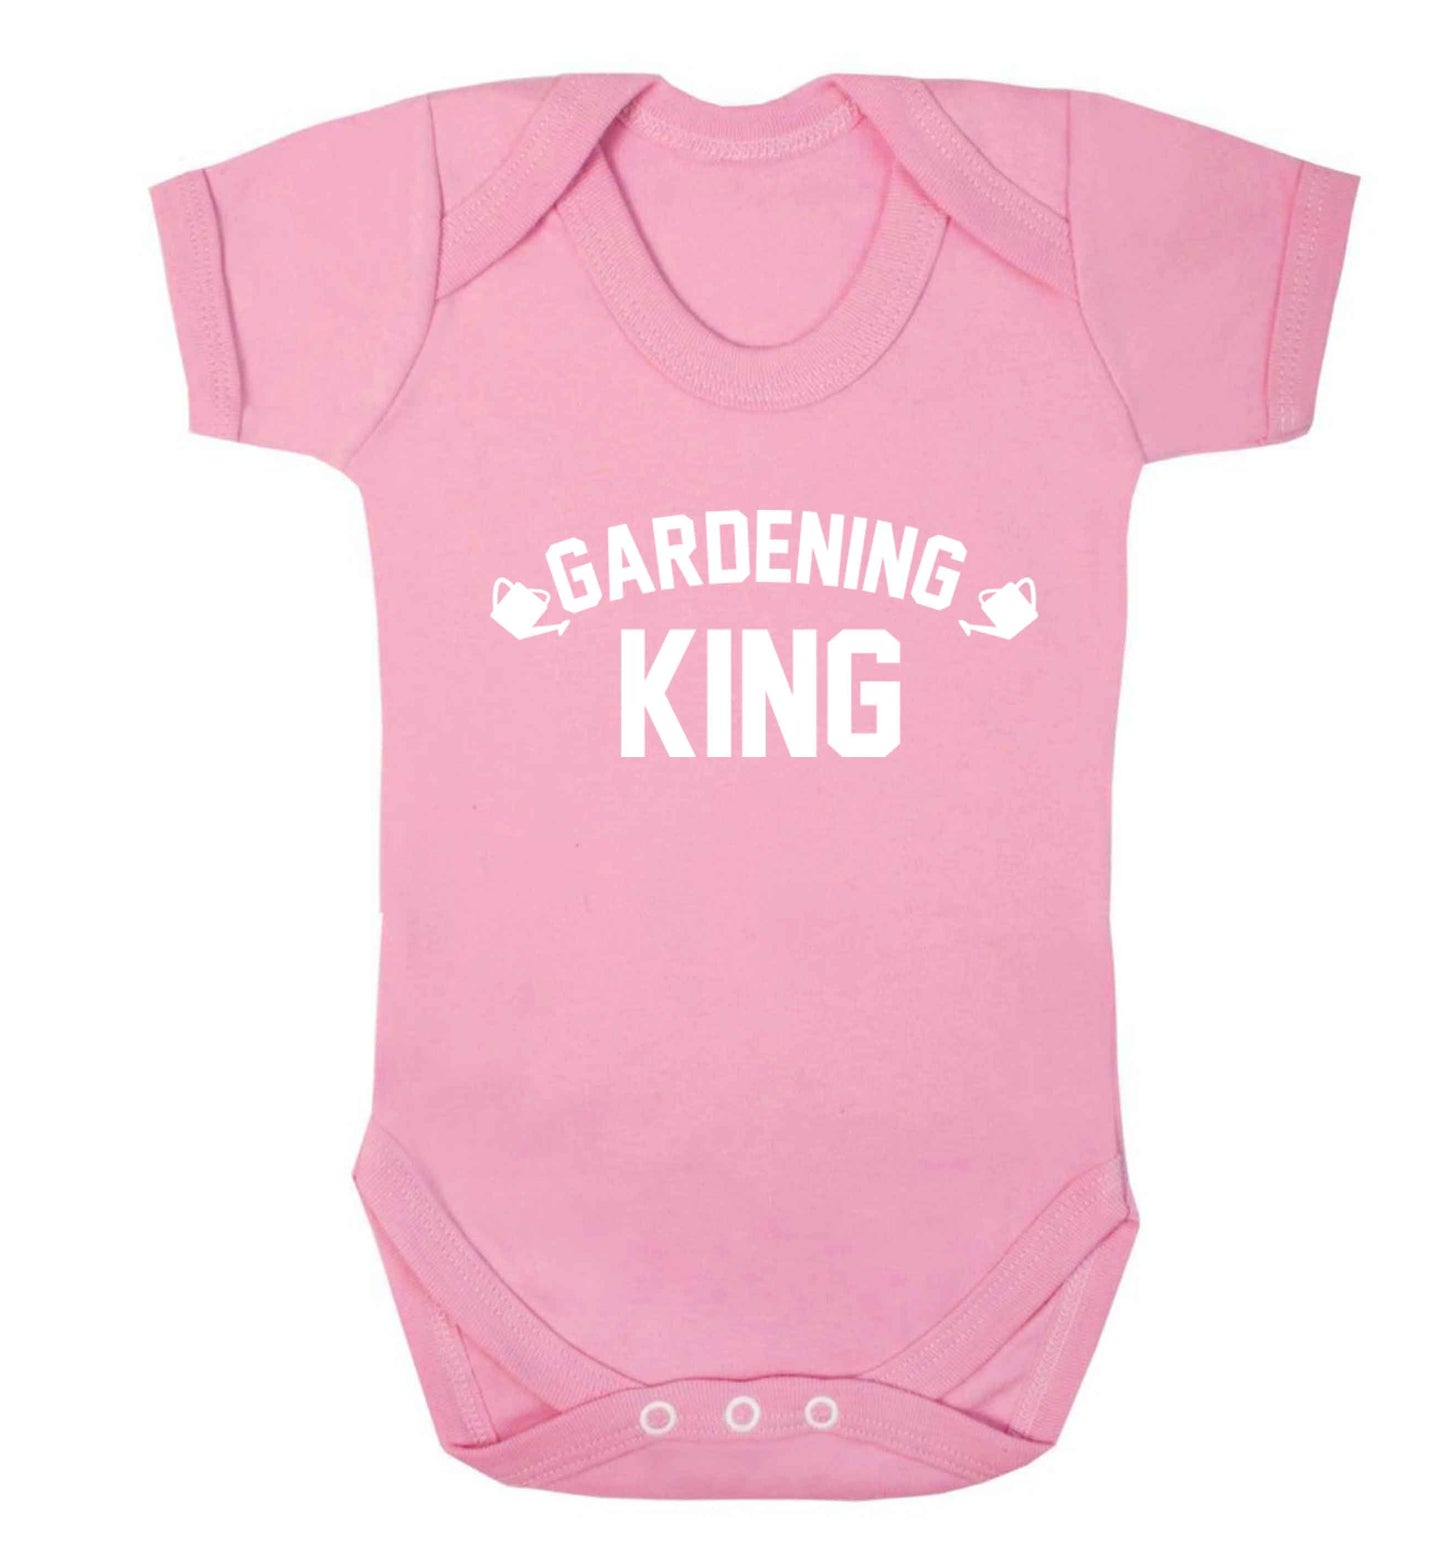 Gardening king Baby Vest pale pink 18-24 months